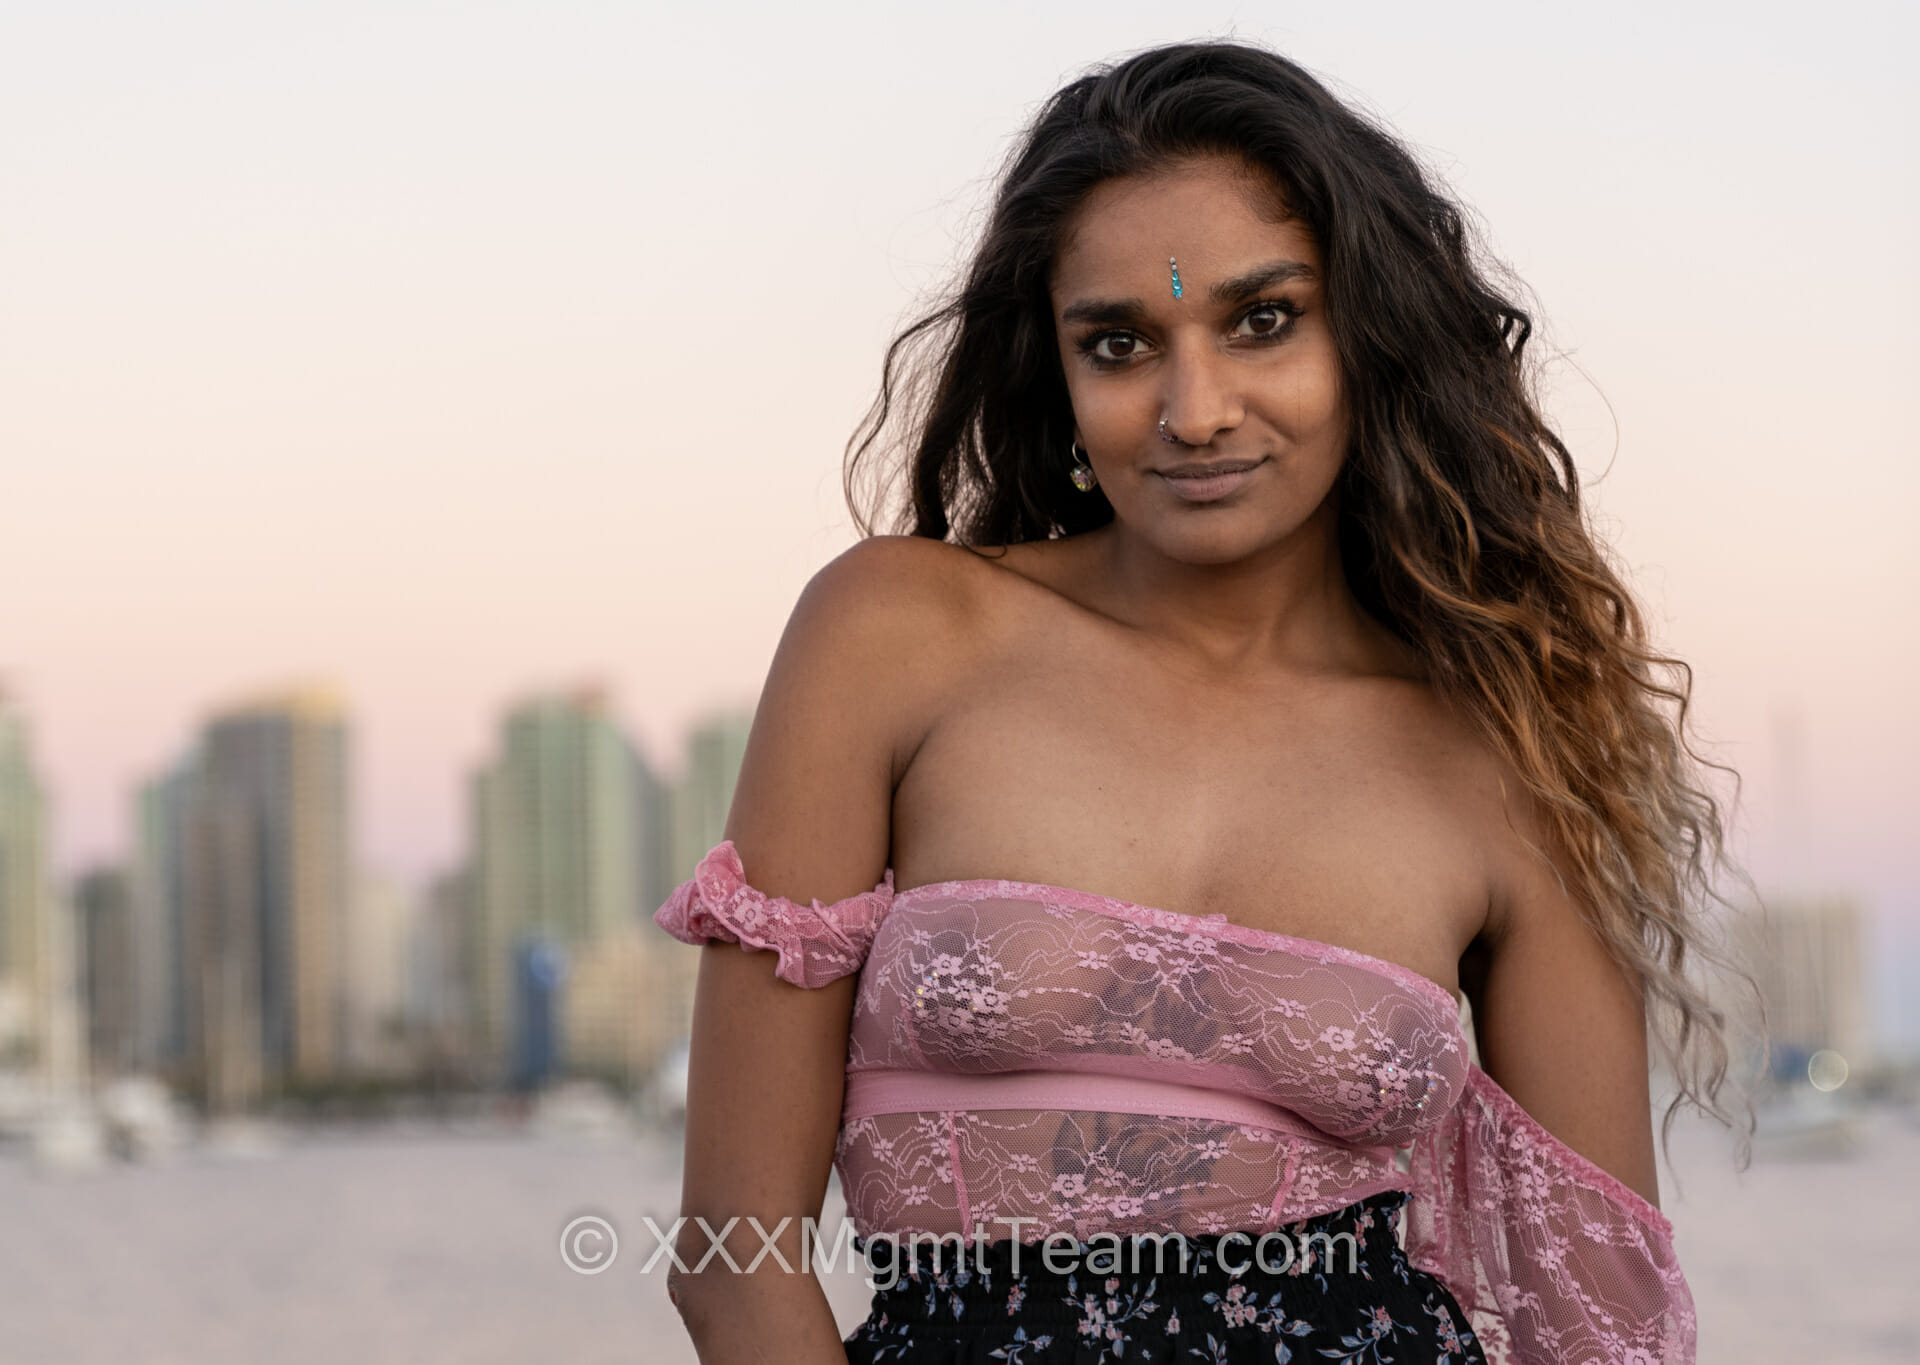 Sri Lanka Porn - Siri Lanka â€“ Pornstar Profile Â» Become a Pornstar Â» Sri Lankan Model